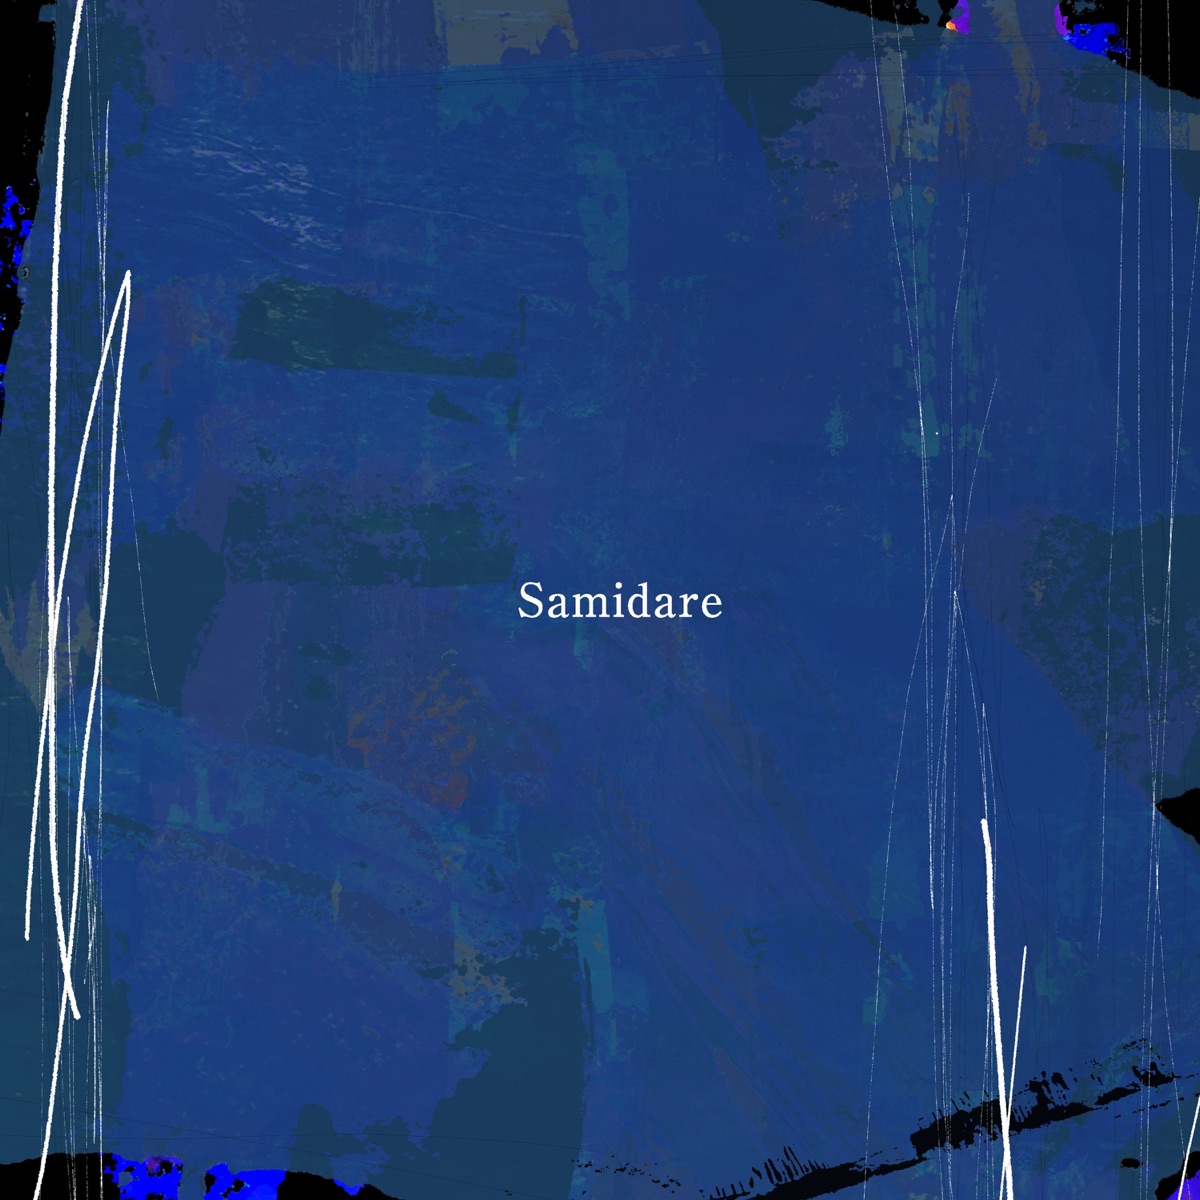 Cover for『Soushi Sakiyama - Samidare』from the release『Samidare』